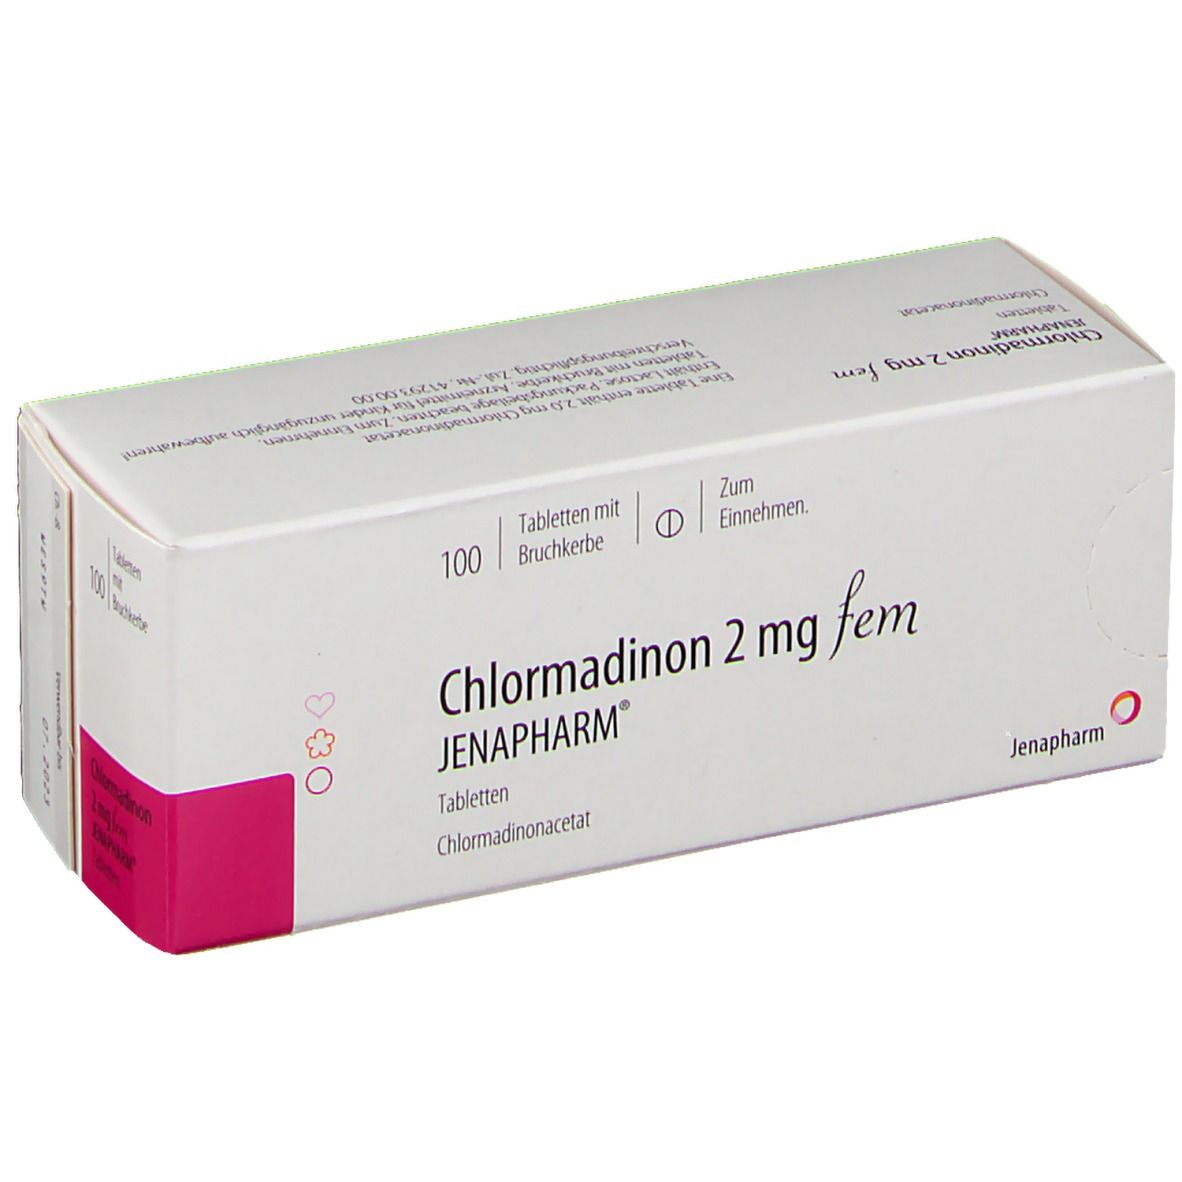 Chlormadinon 2 mg fem JENAPHARM®